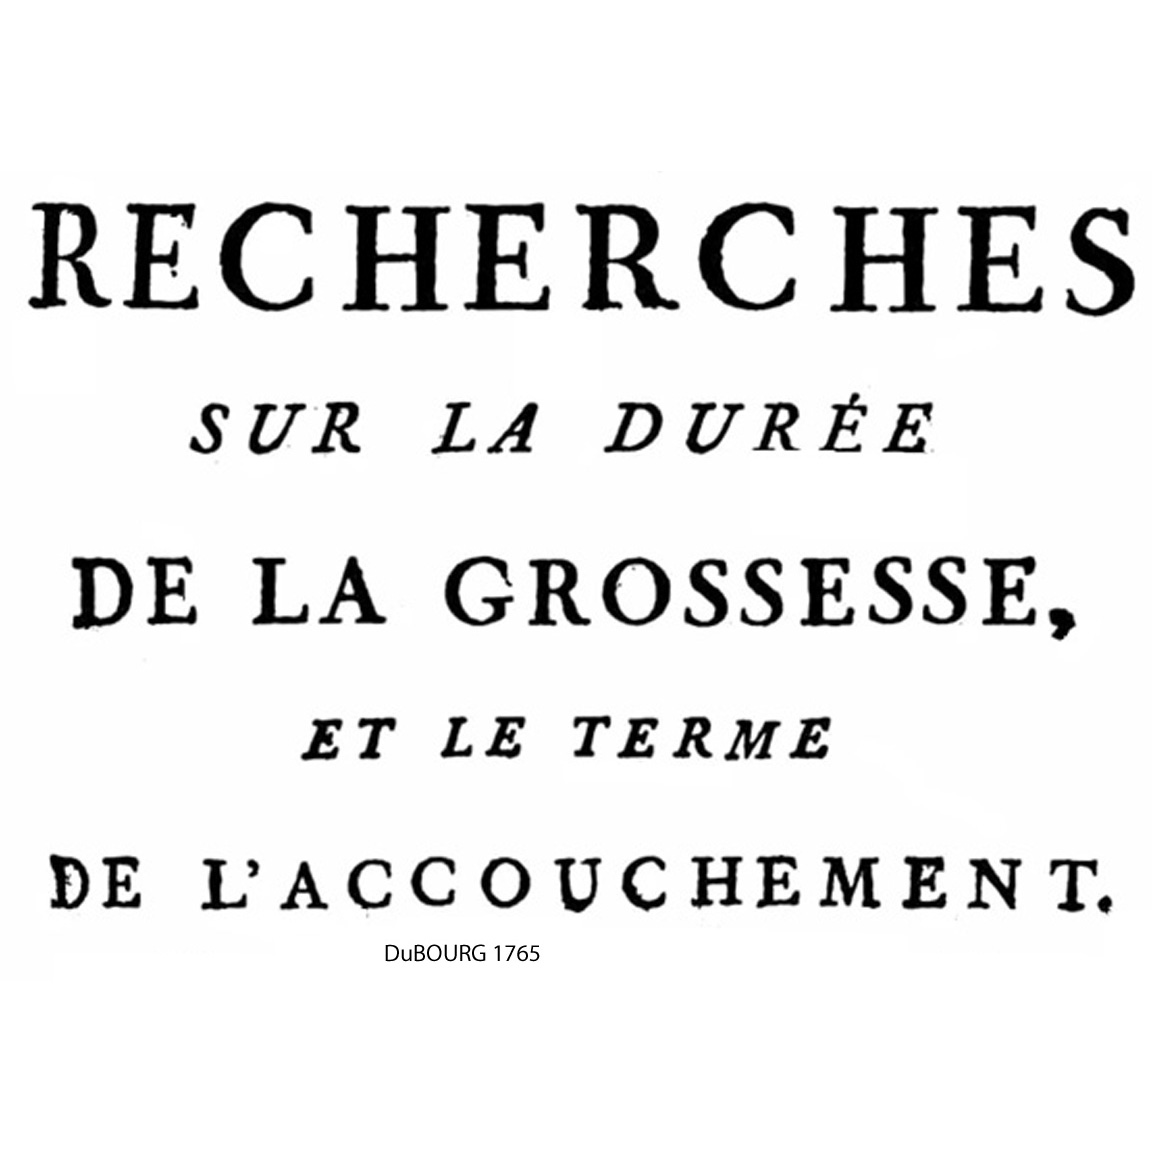 1765-DuBOURG-Durée Grossesse - title page